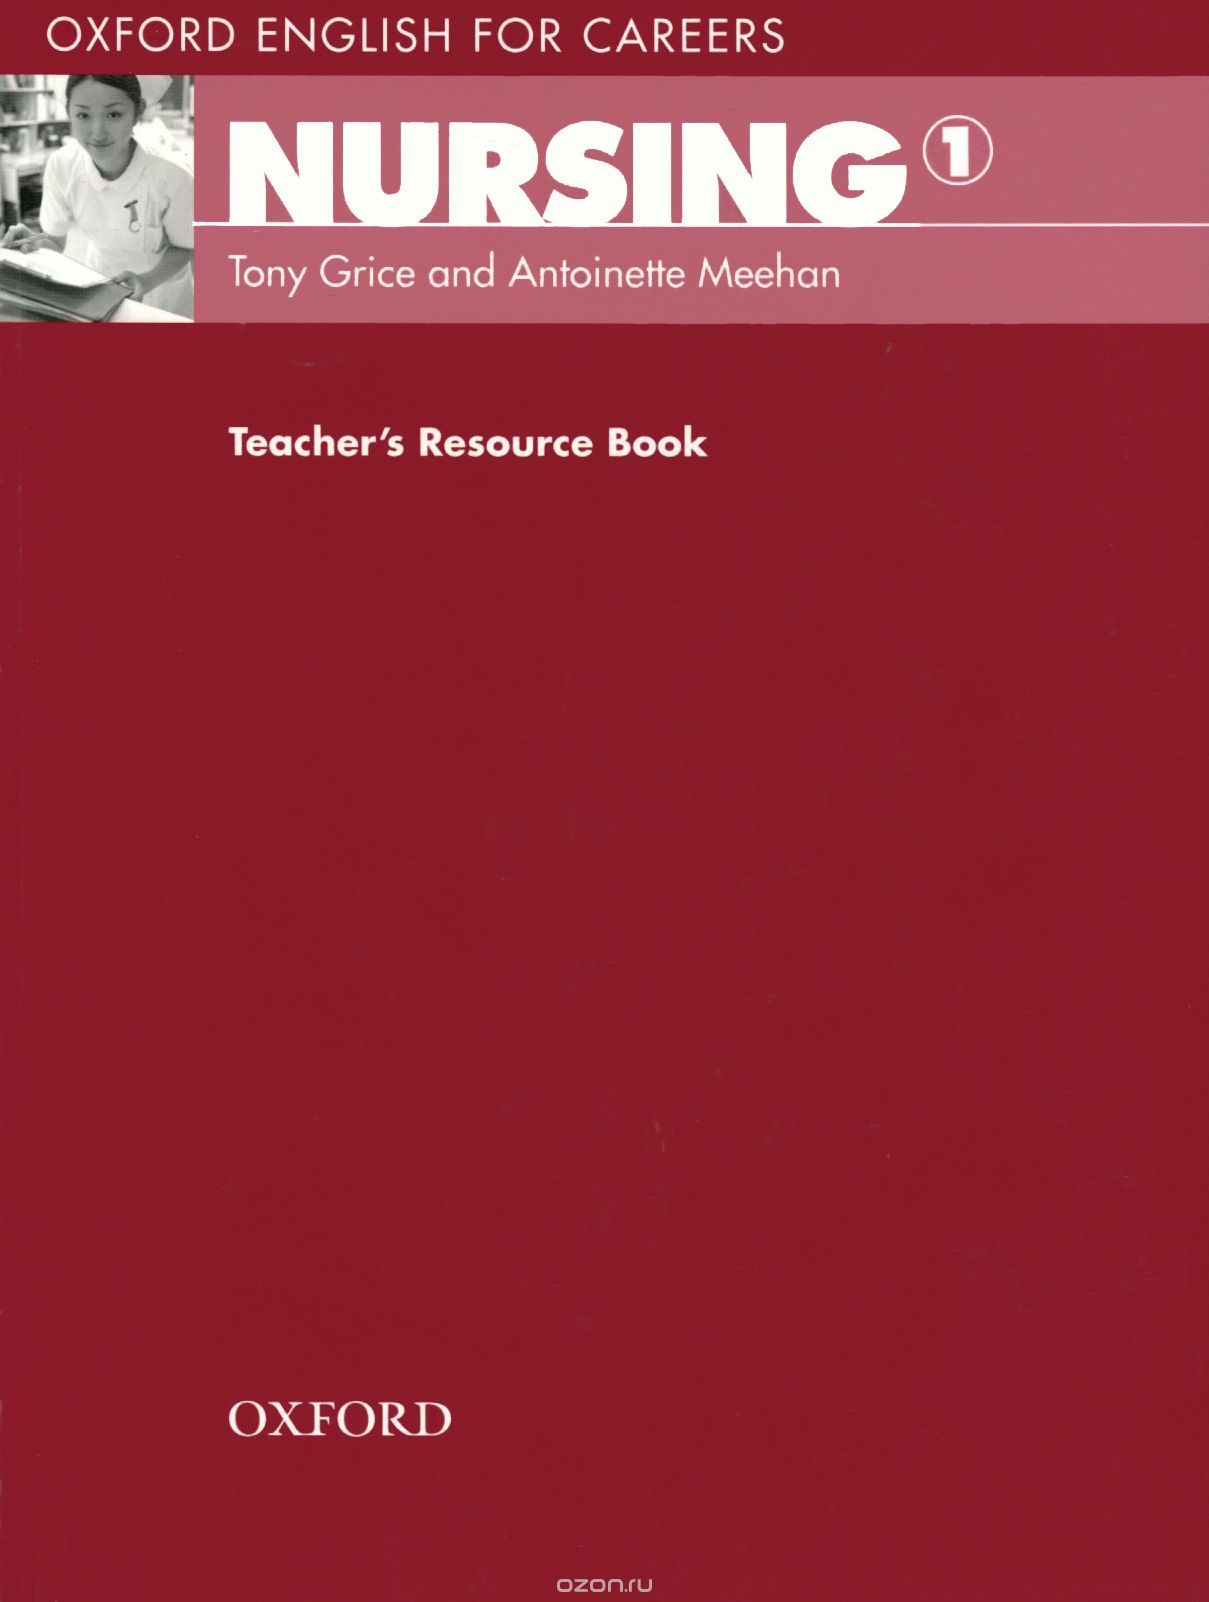 Oxford English for Careers: Nursing 1: Teacher's Resource Book